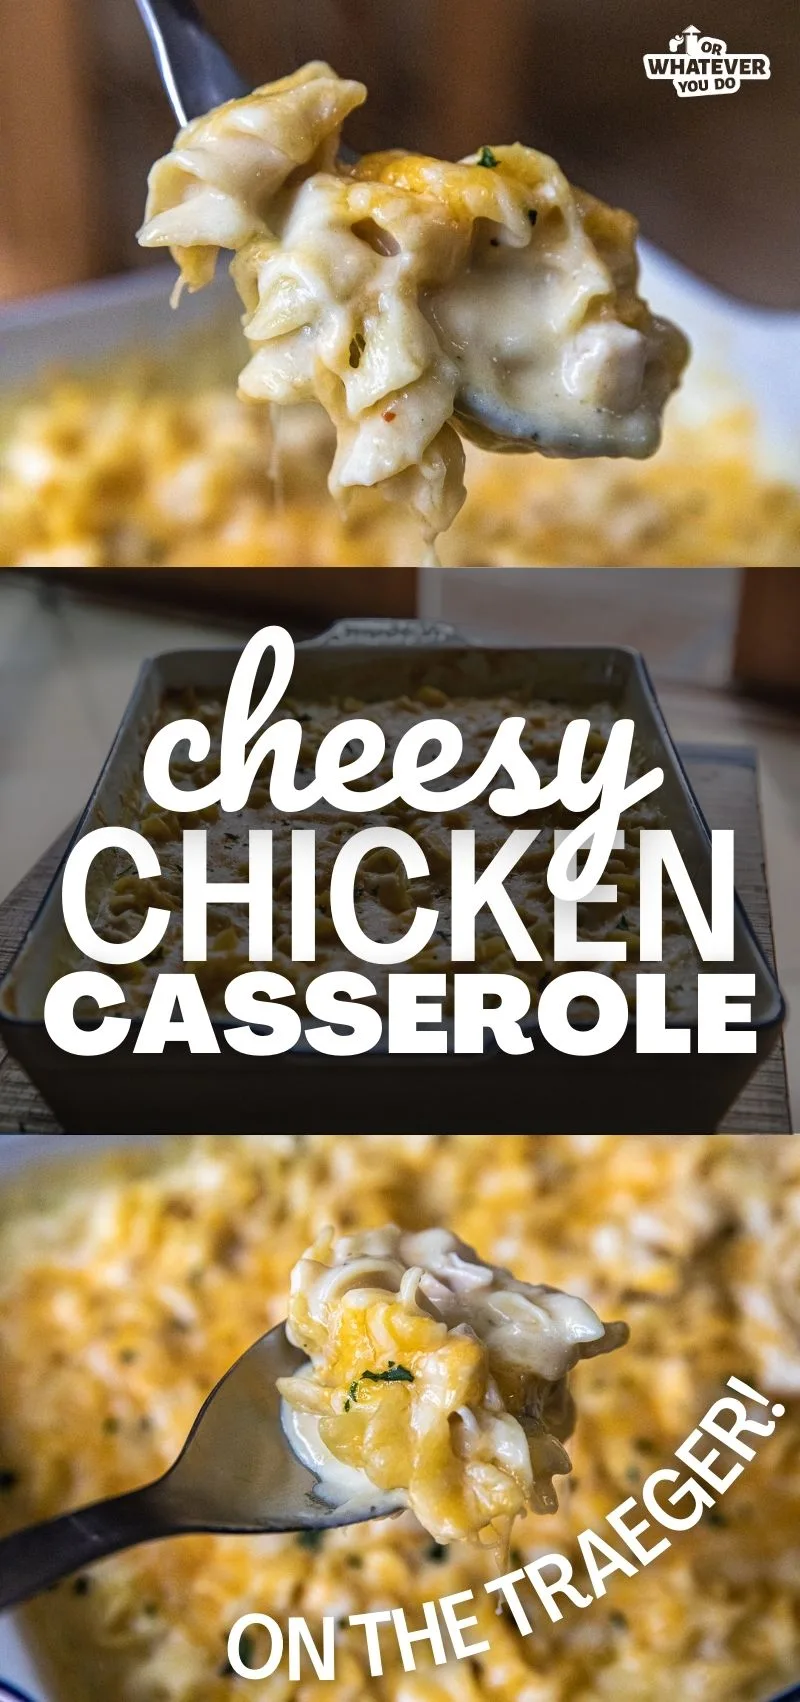 Traeger Cheesy Chicken Casserole